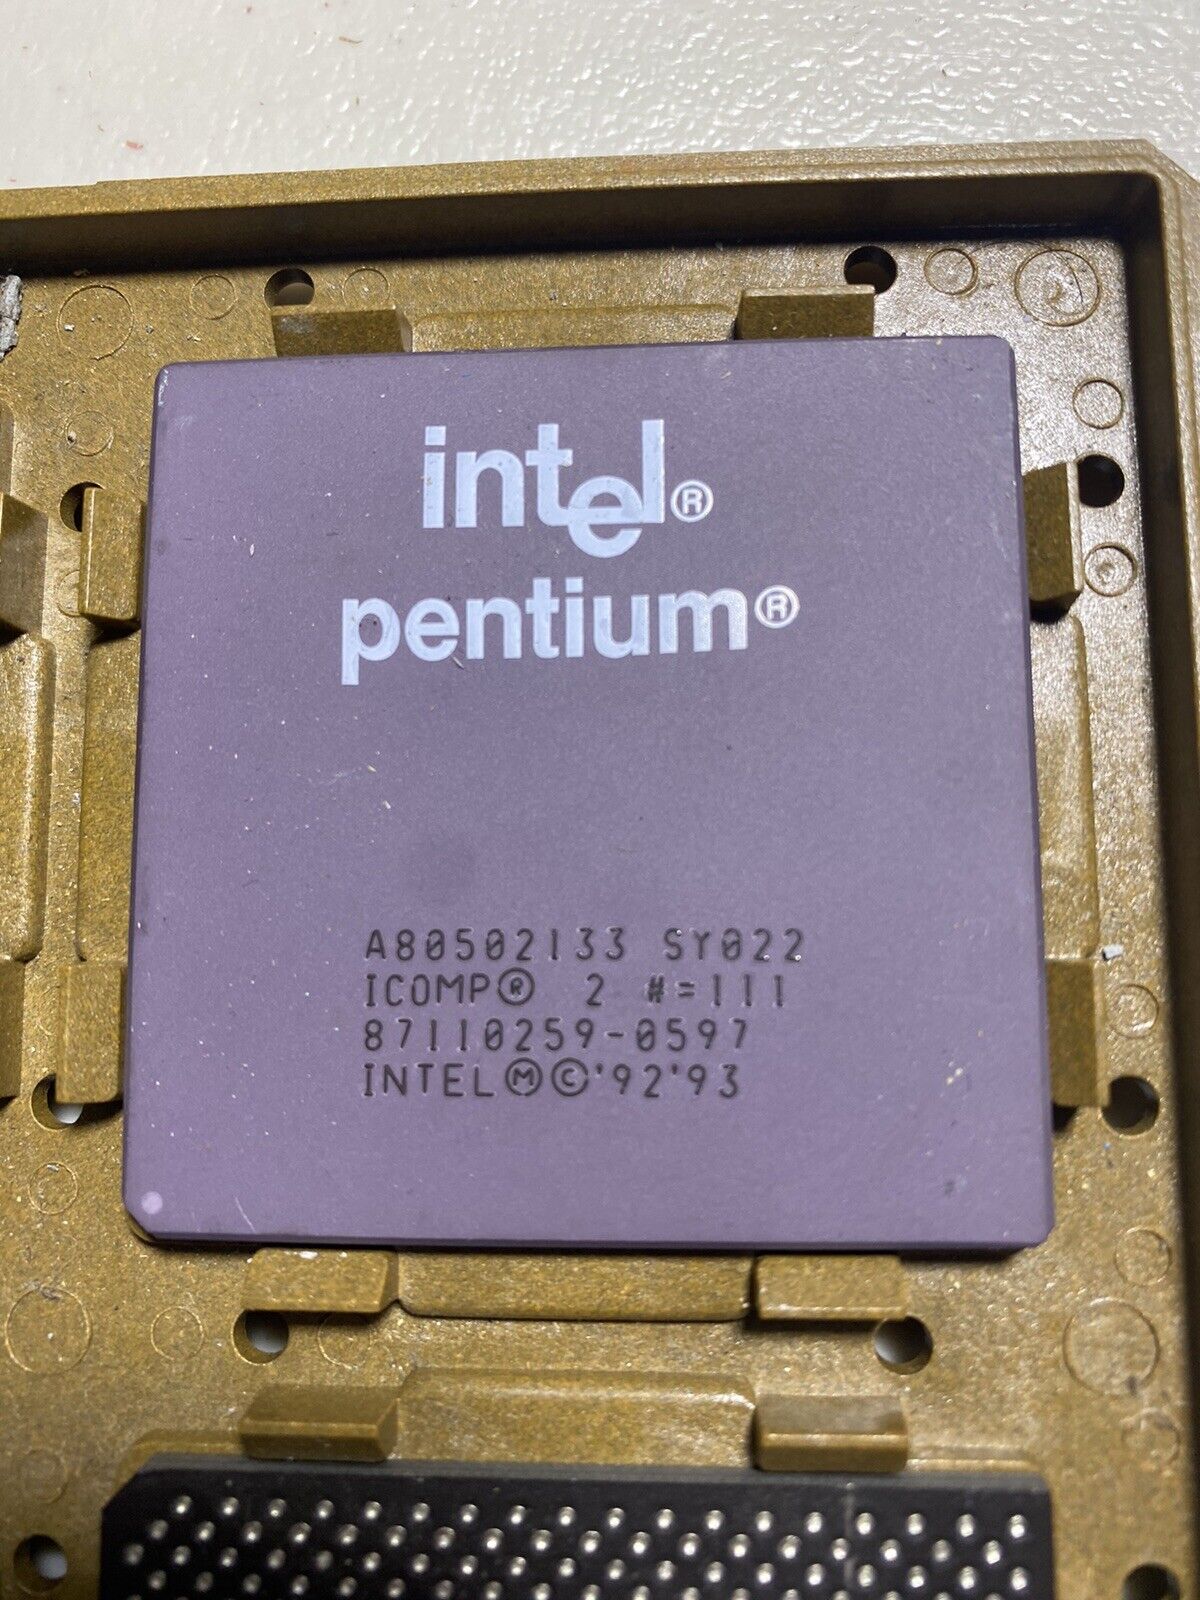 Vintage Intel A80502133 Pentium